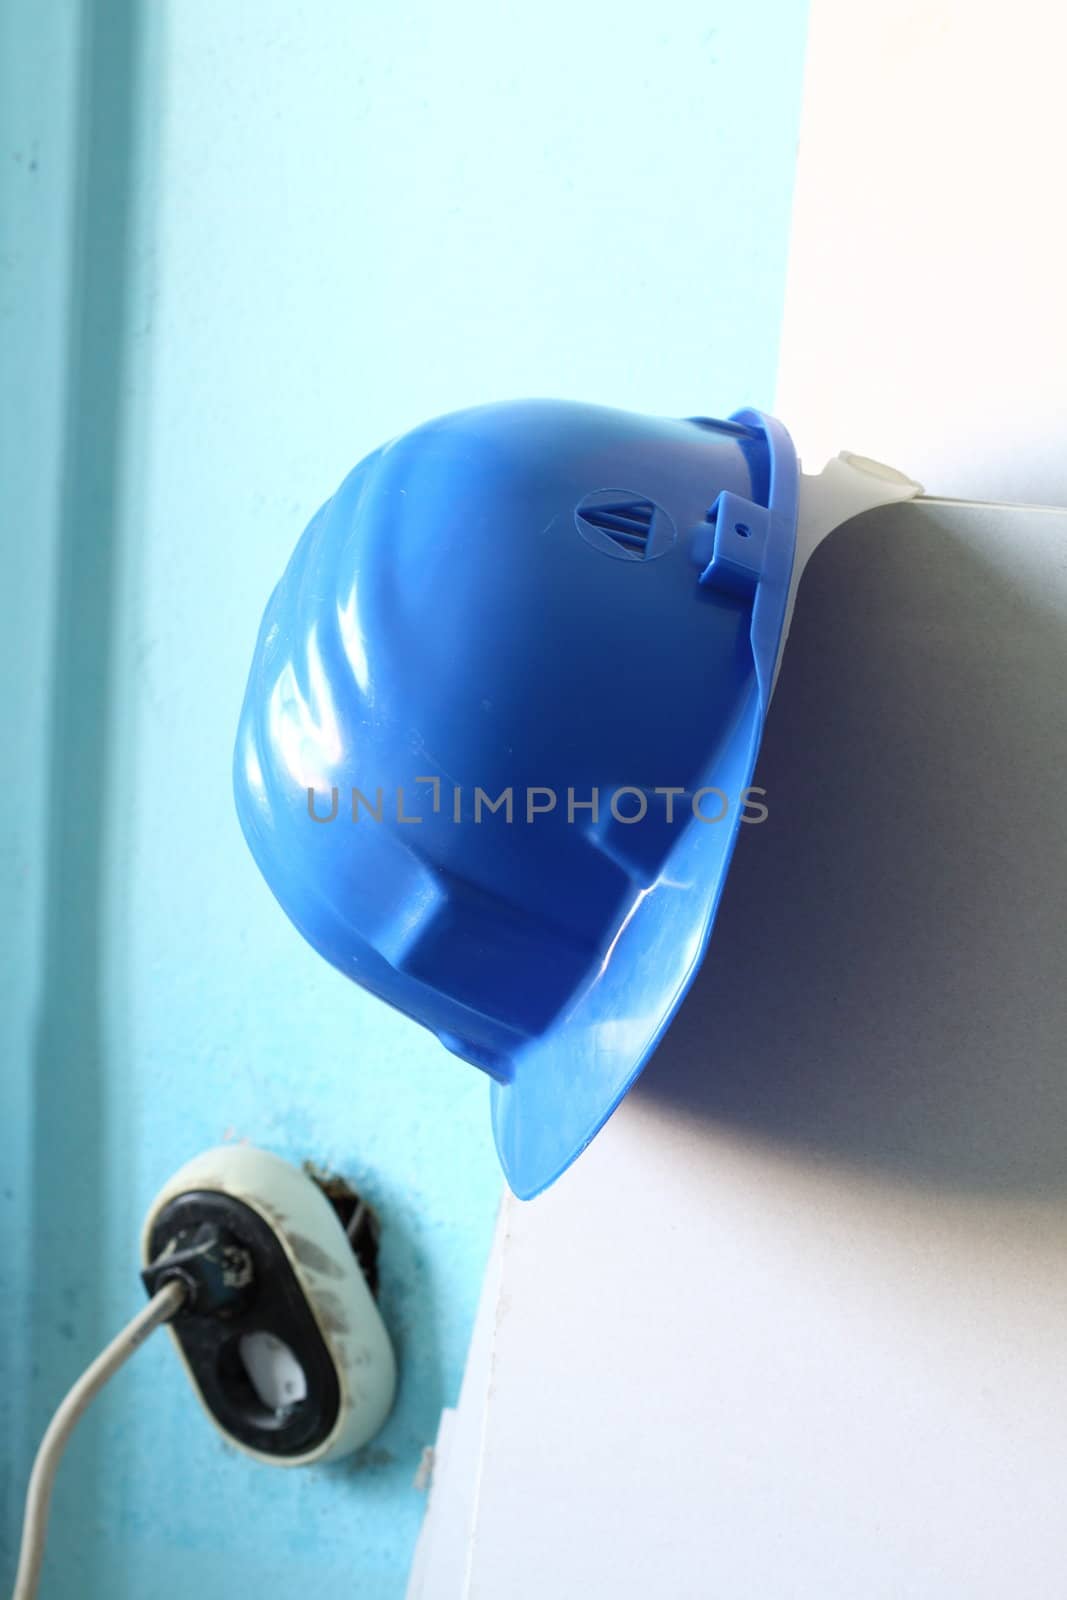 Blue helmet  close up on work place 